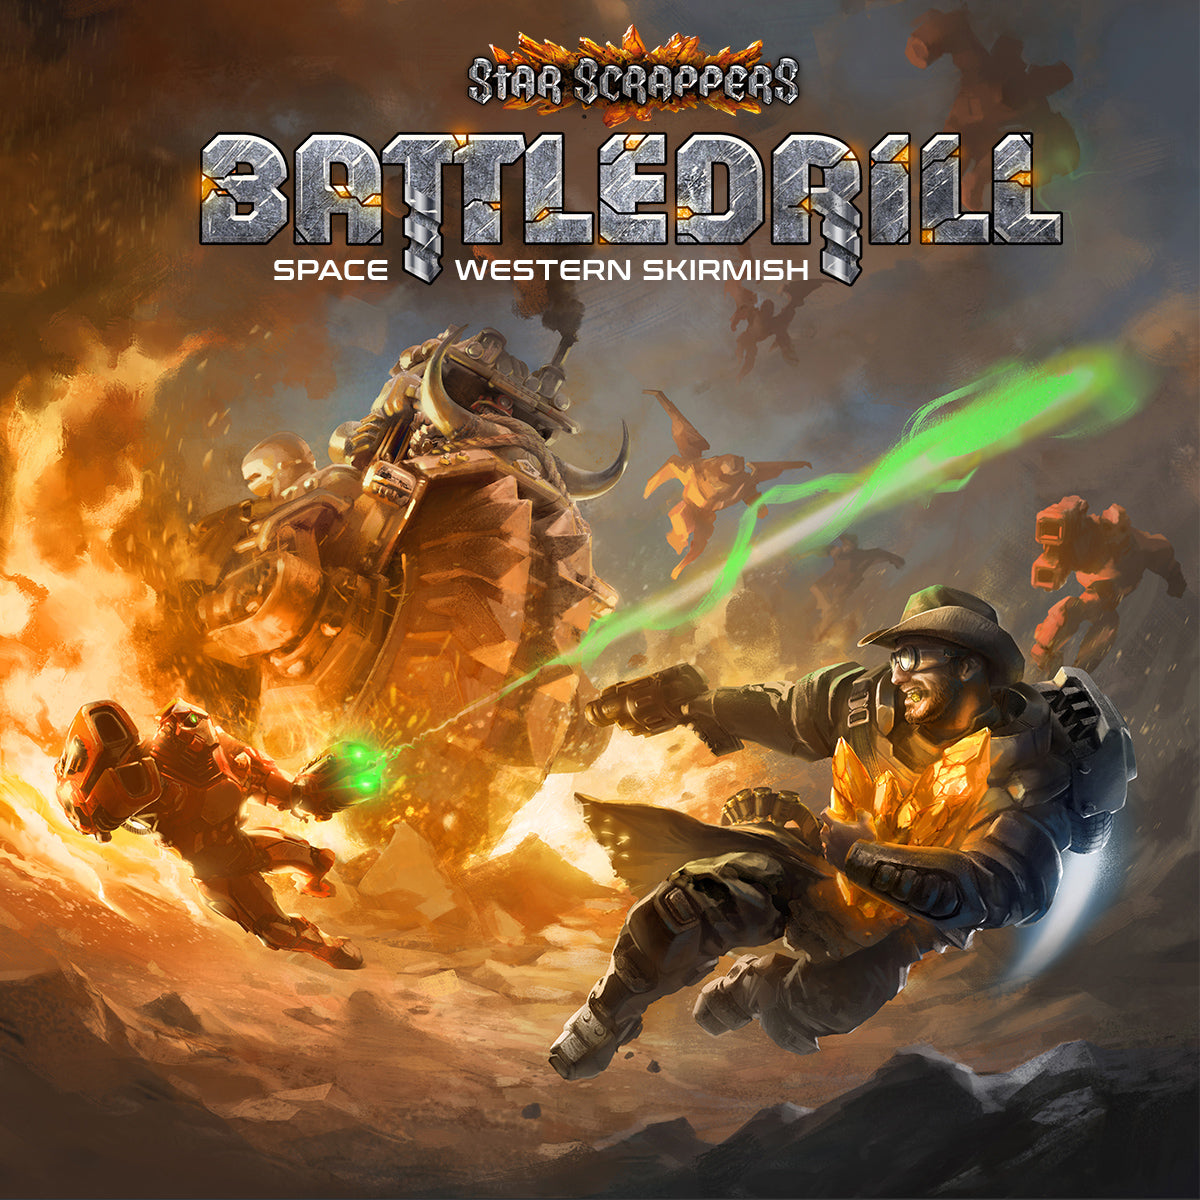 Mak`Rel Glider Hydran Fraktion Battledrill Kickstarter Brettspiele, Rollenspiel Maler